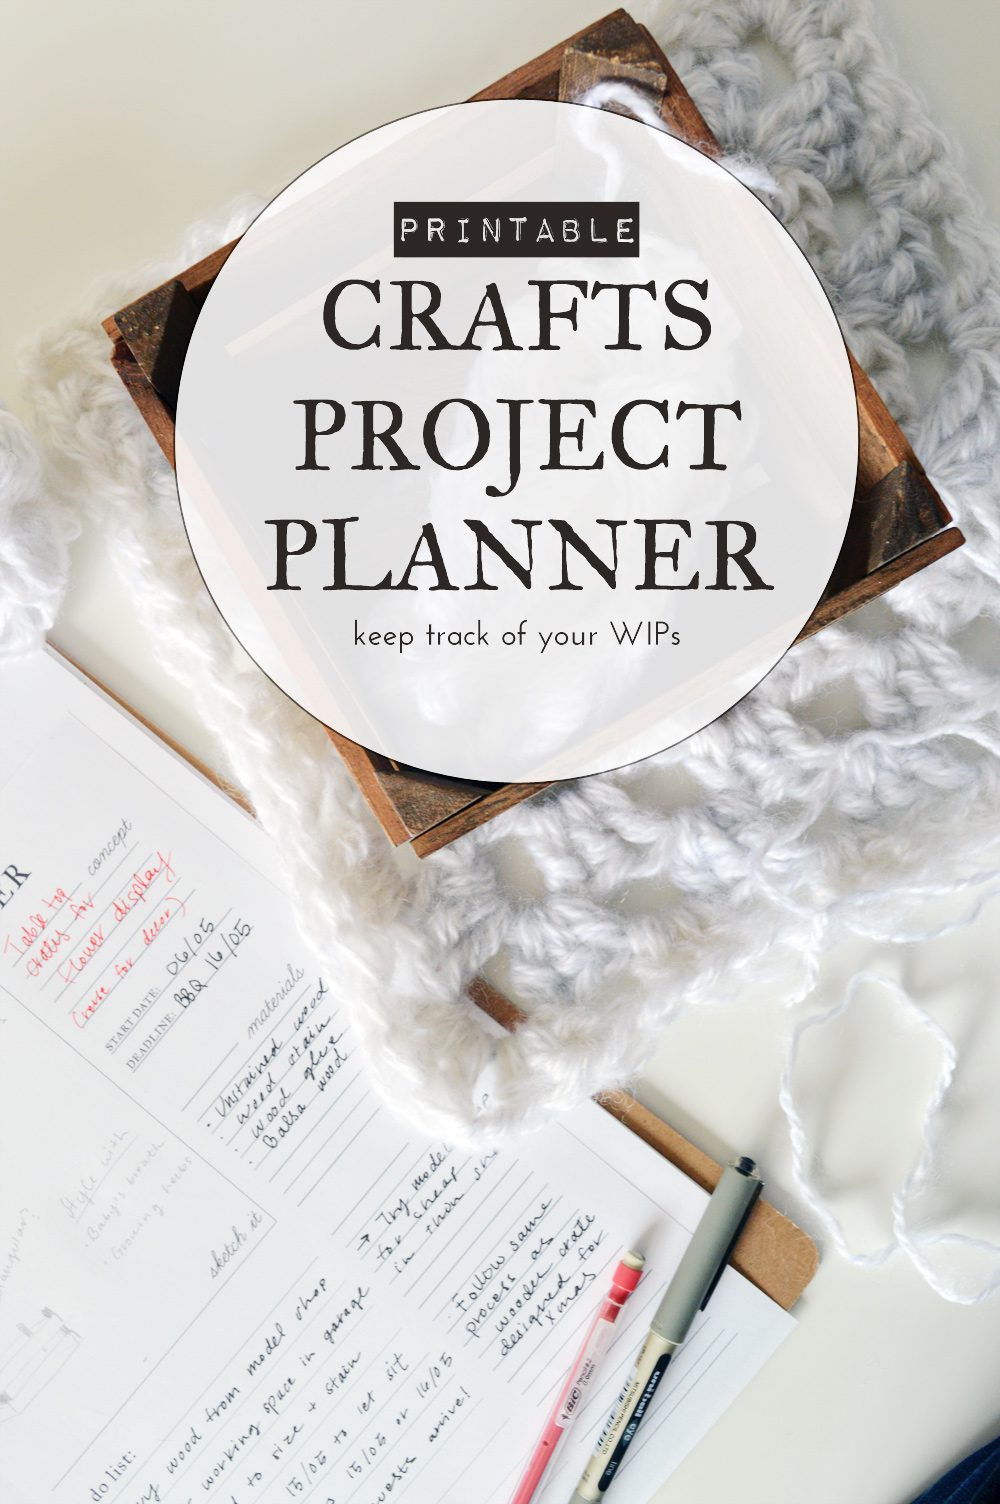 Printable craft project planner |  #crafts #DIY #printable #freebie